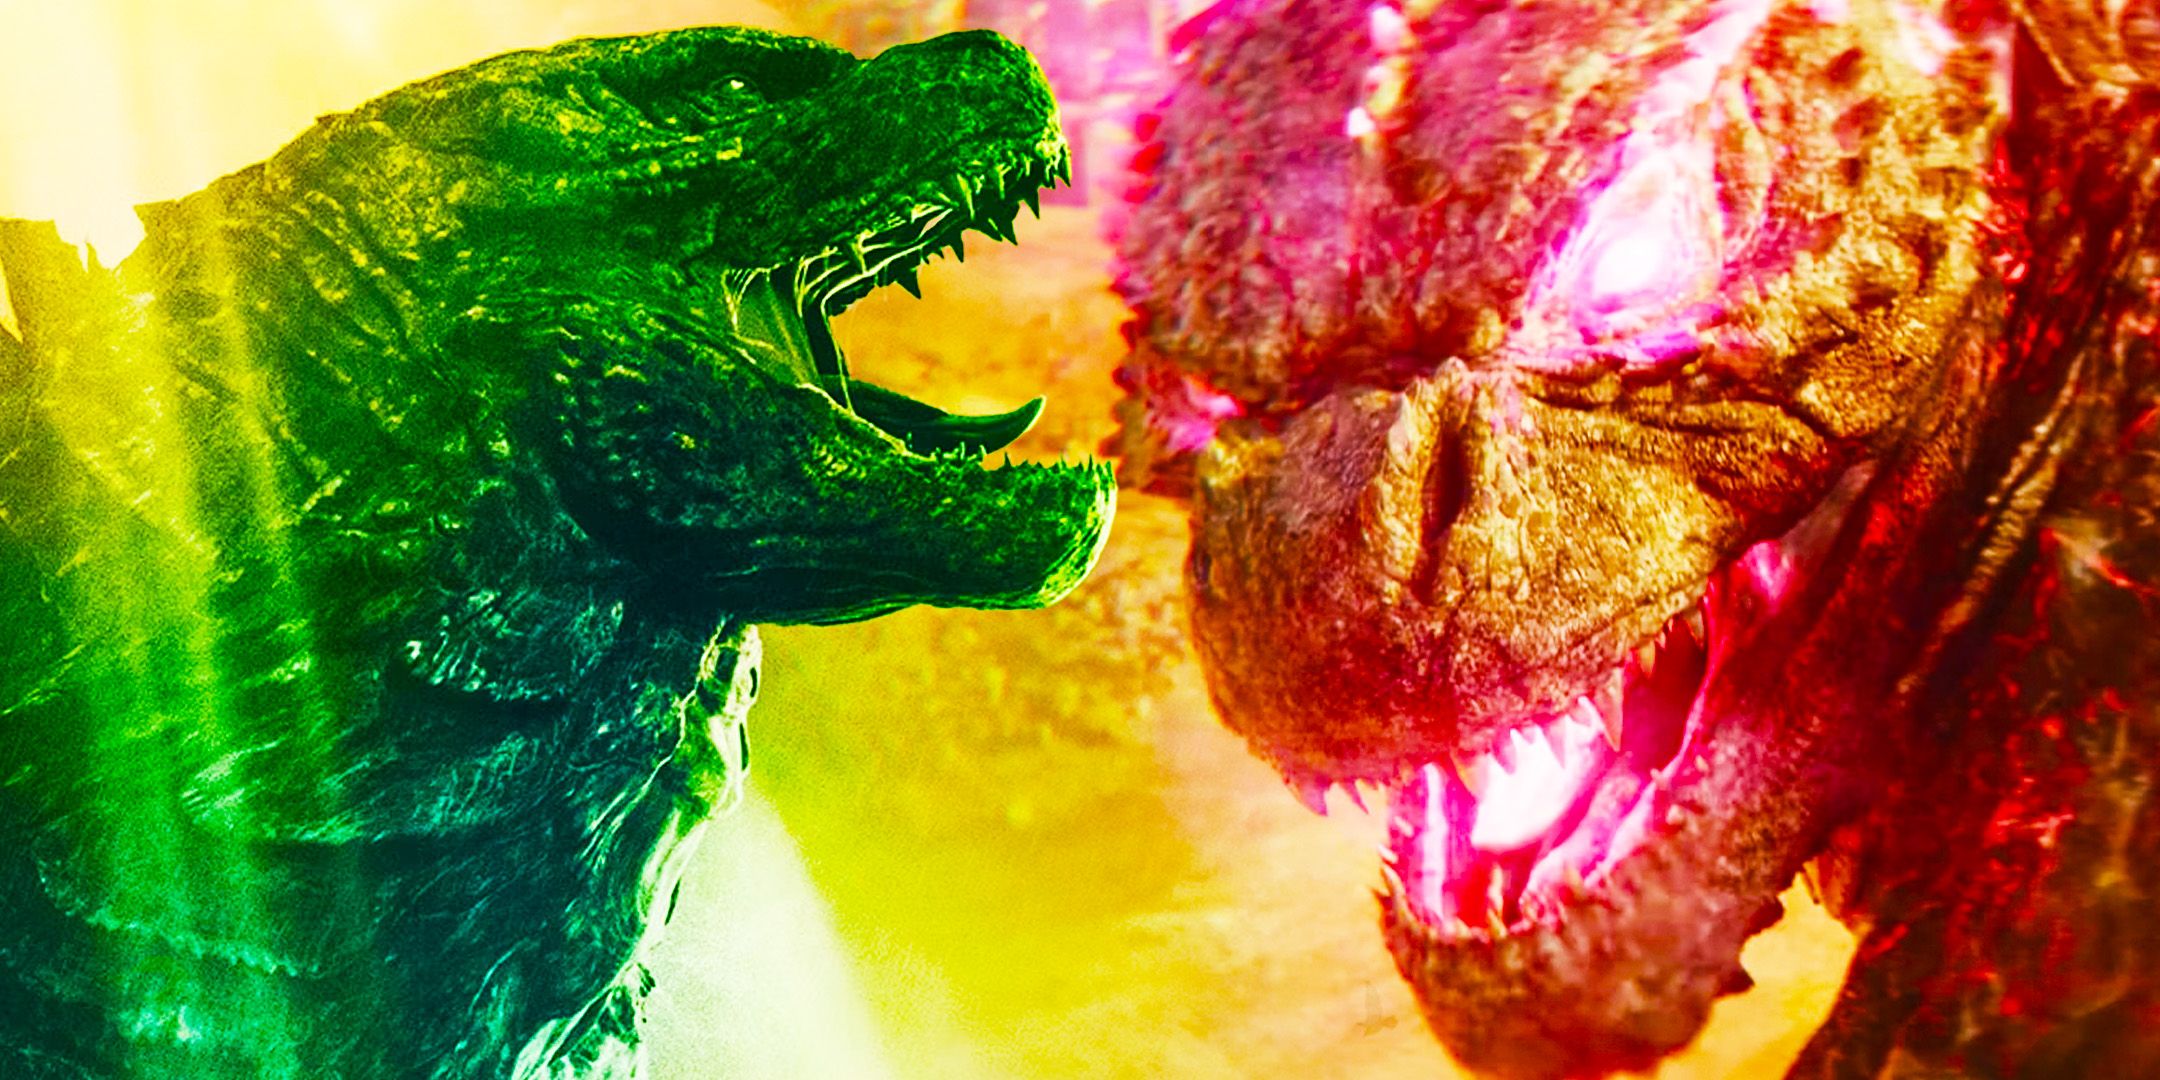 Pink Godzilla Sets Up Even Crazier Transformations